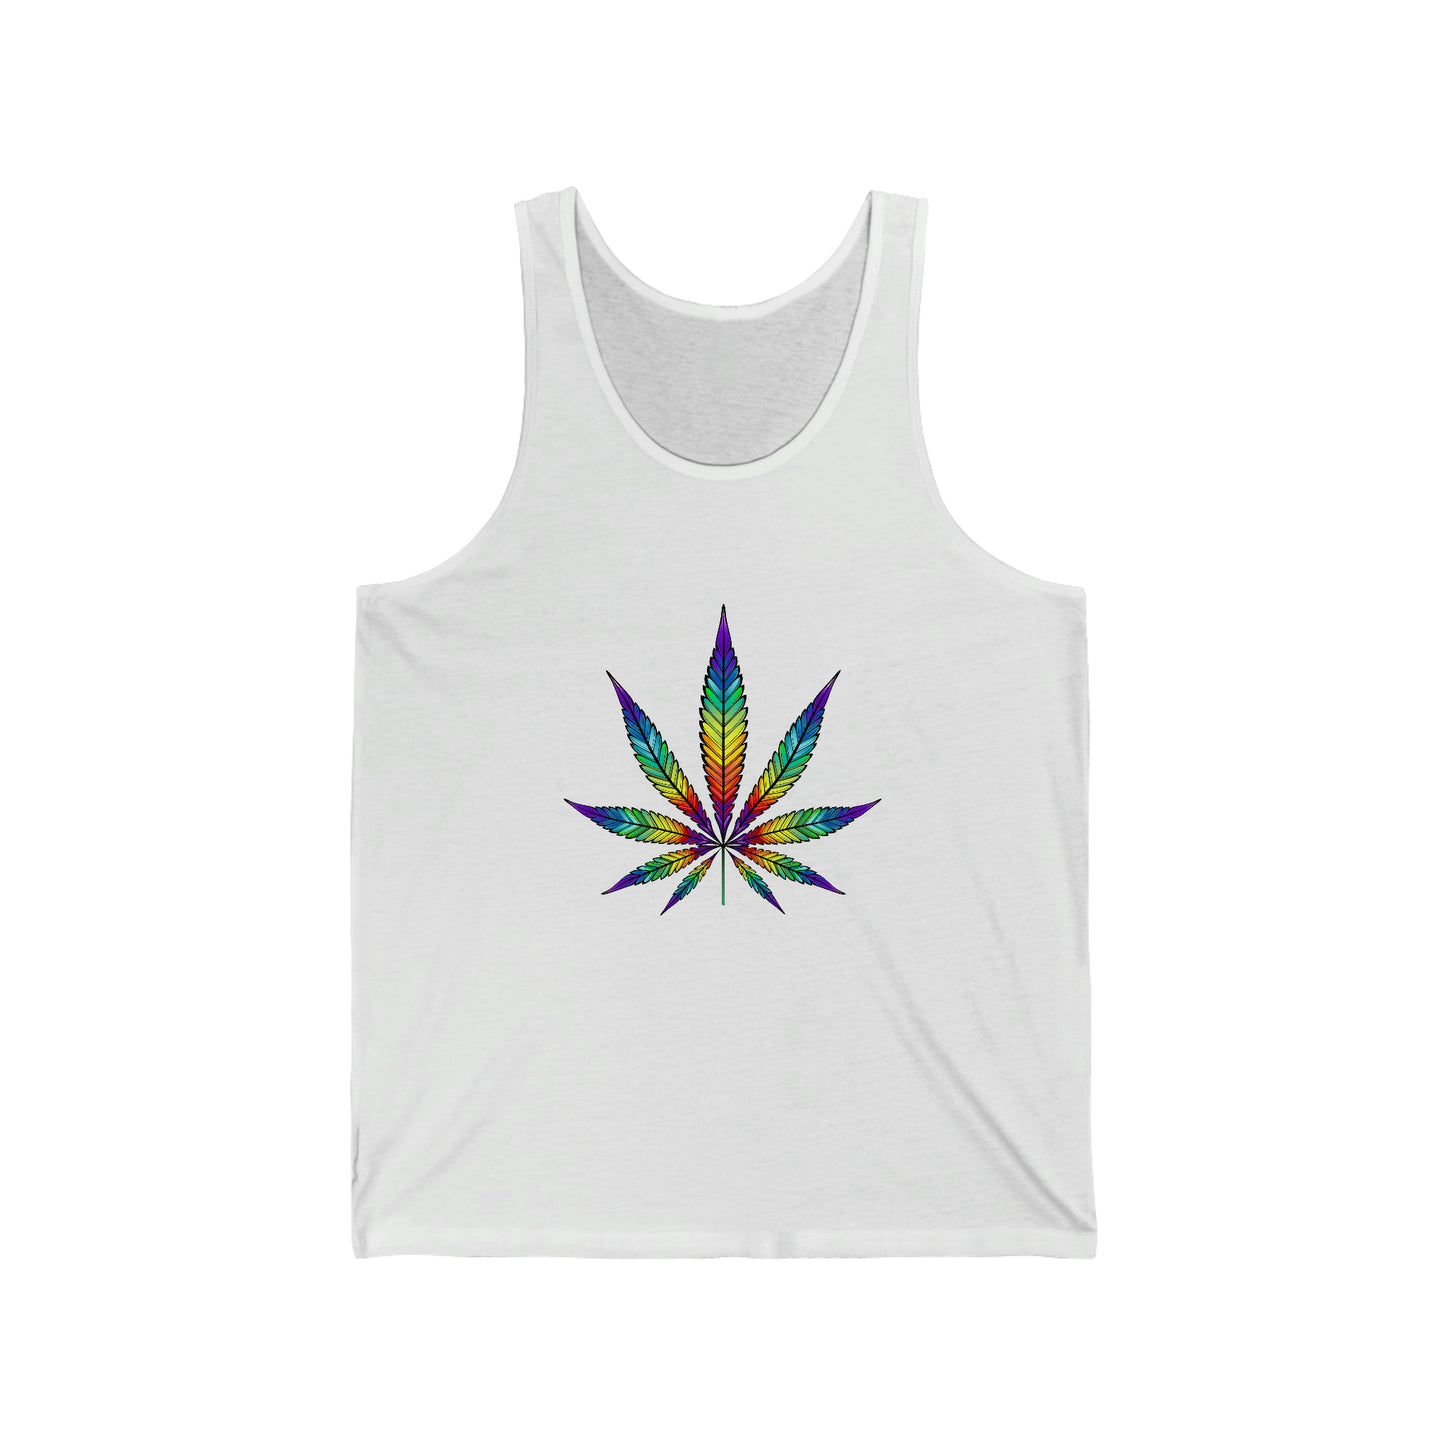 A white Rainbow Weed Leaf Jersey Tank with a rainbow marijuana leaf on it.